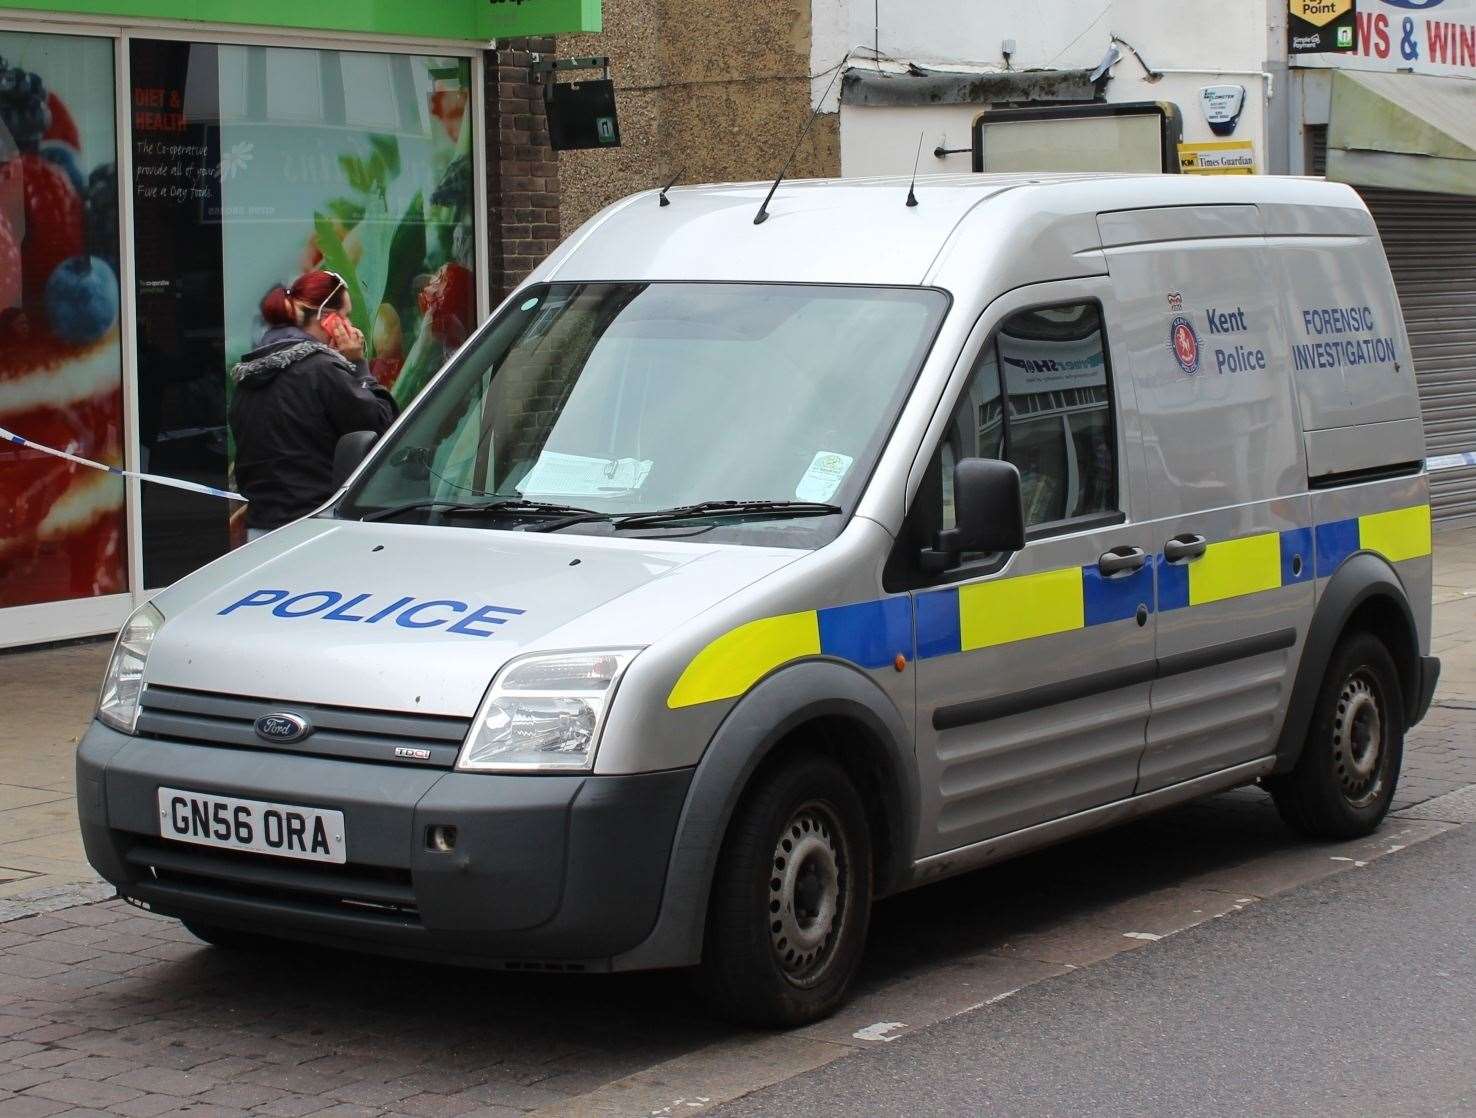 Kent police forensics van. Stock photo (9529946)